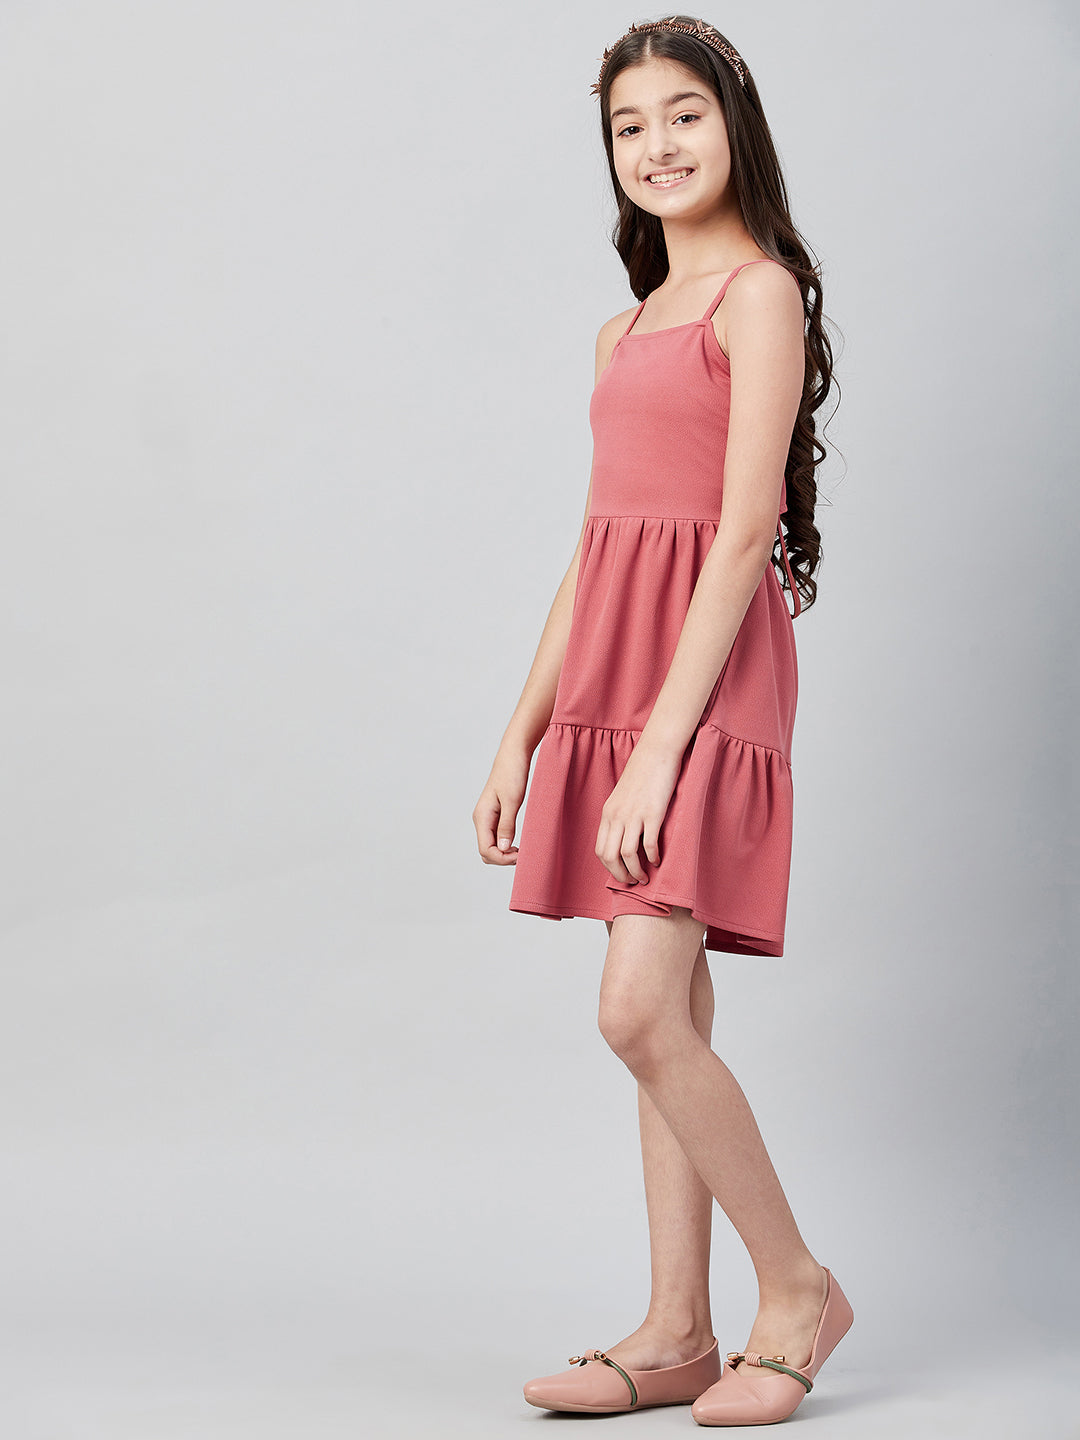 Athena Girl Pink Layered Dress - Athena Lifestyle